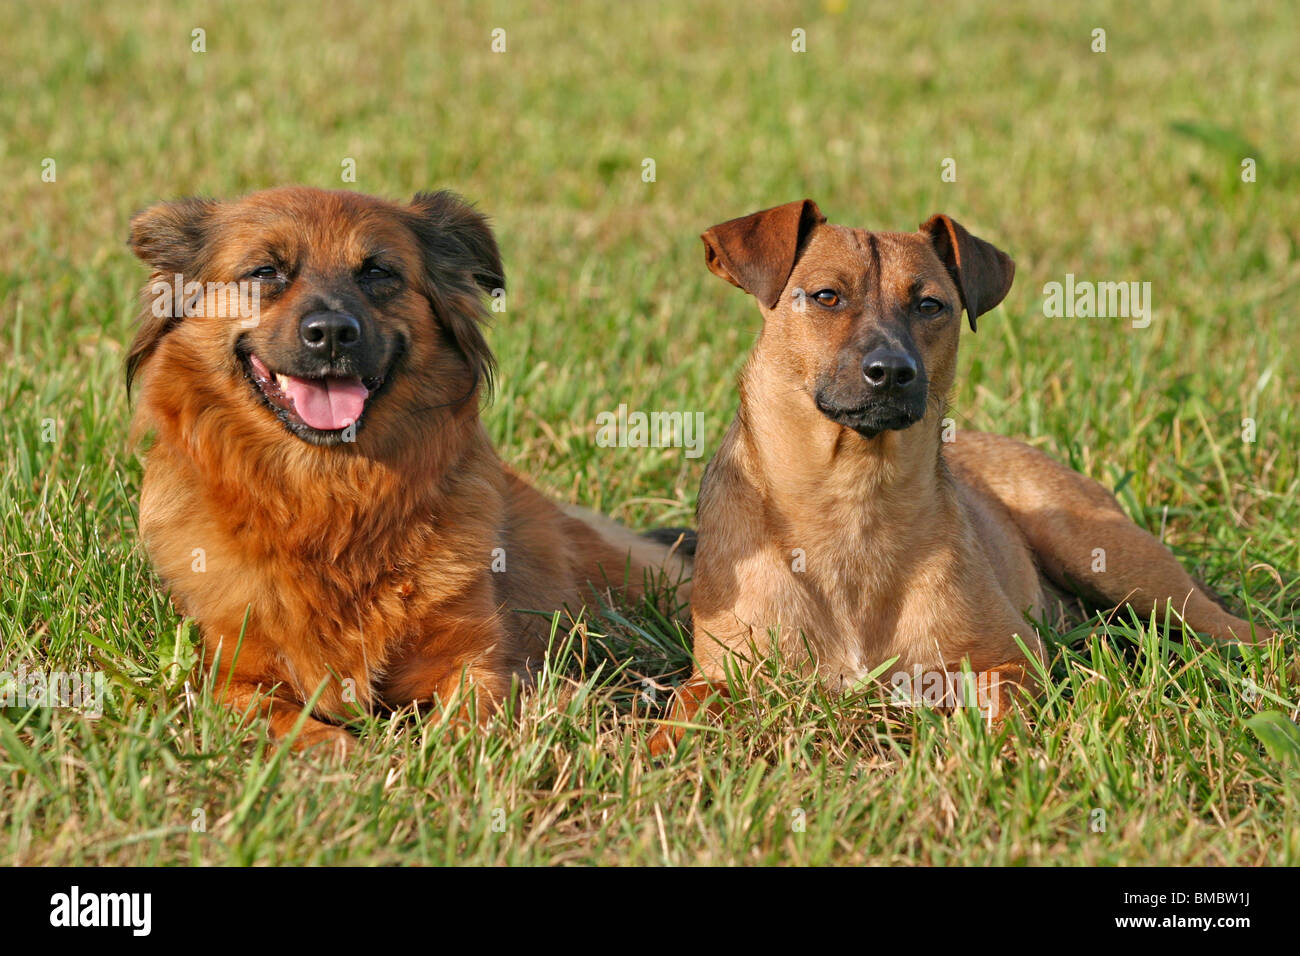 zwei Mischlinge / two dogs Stock Photo